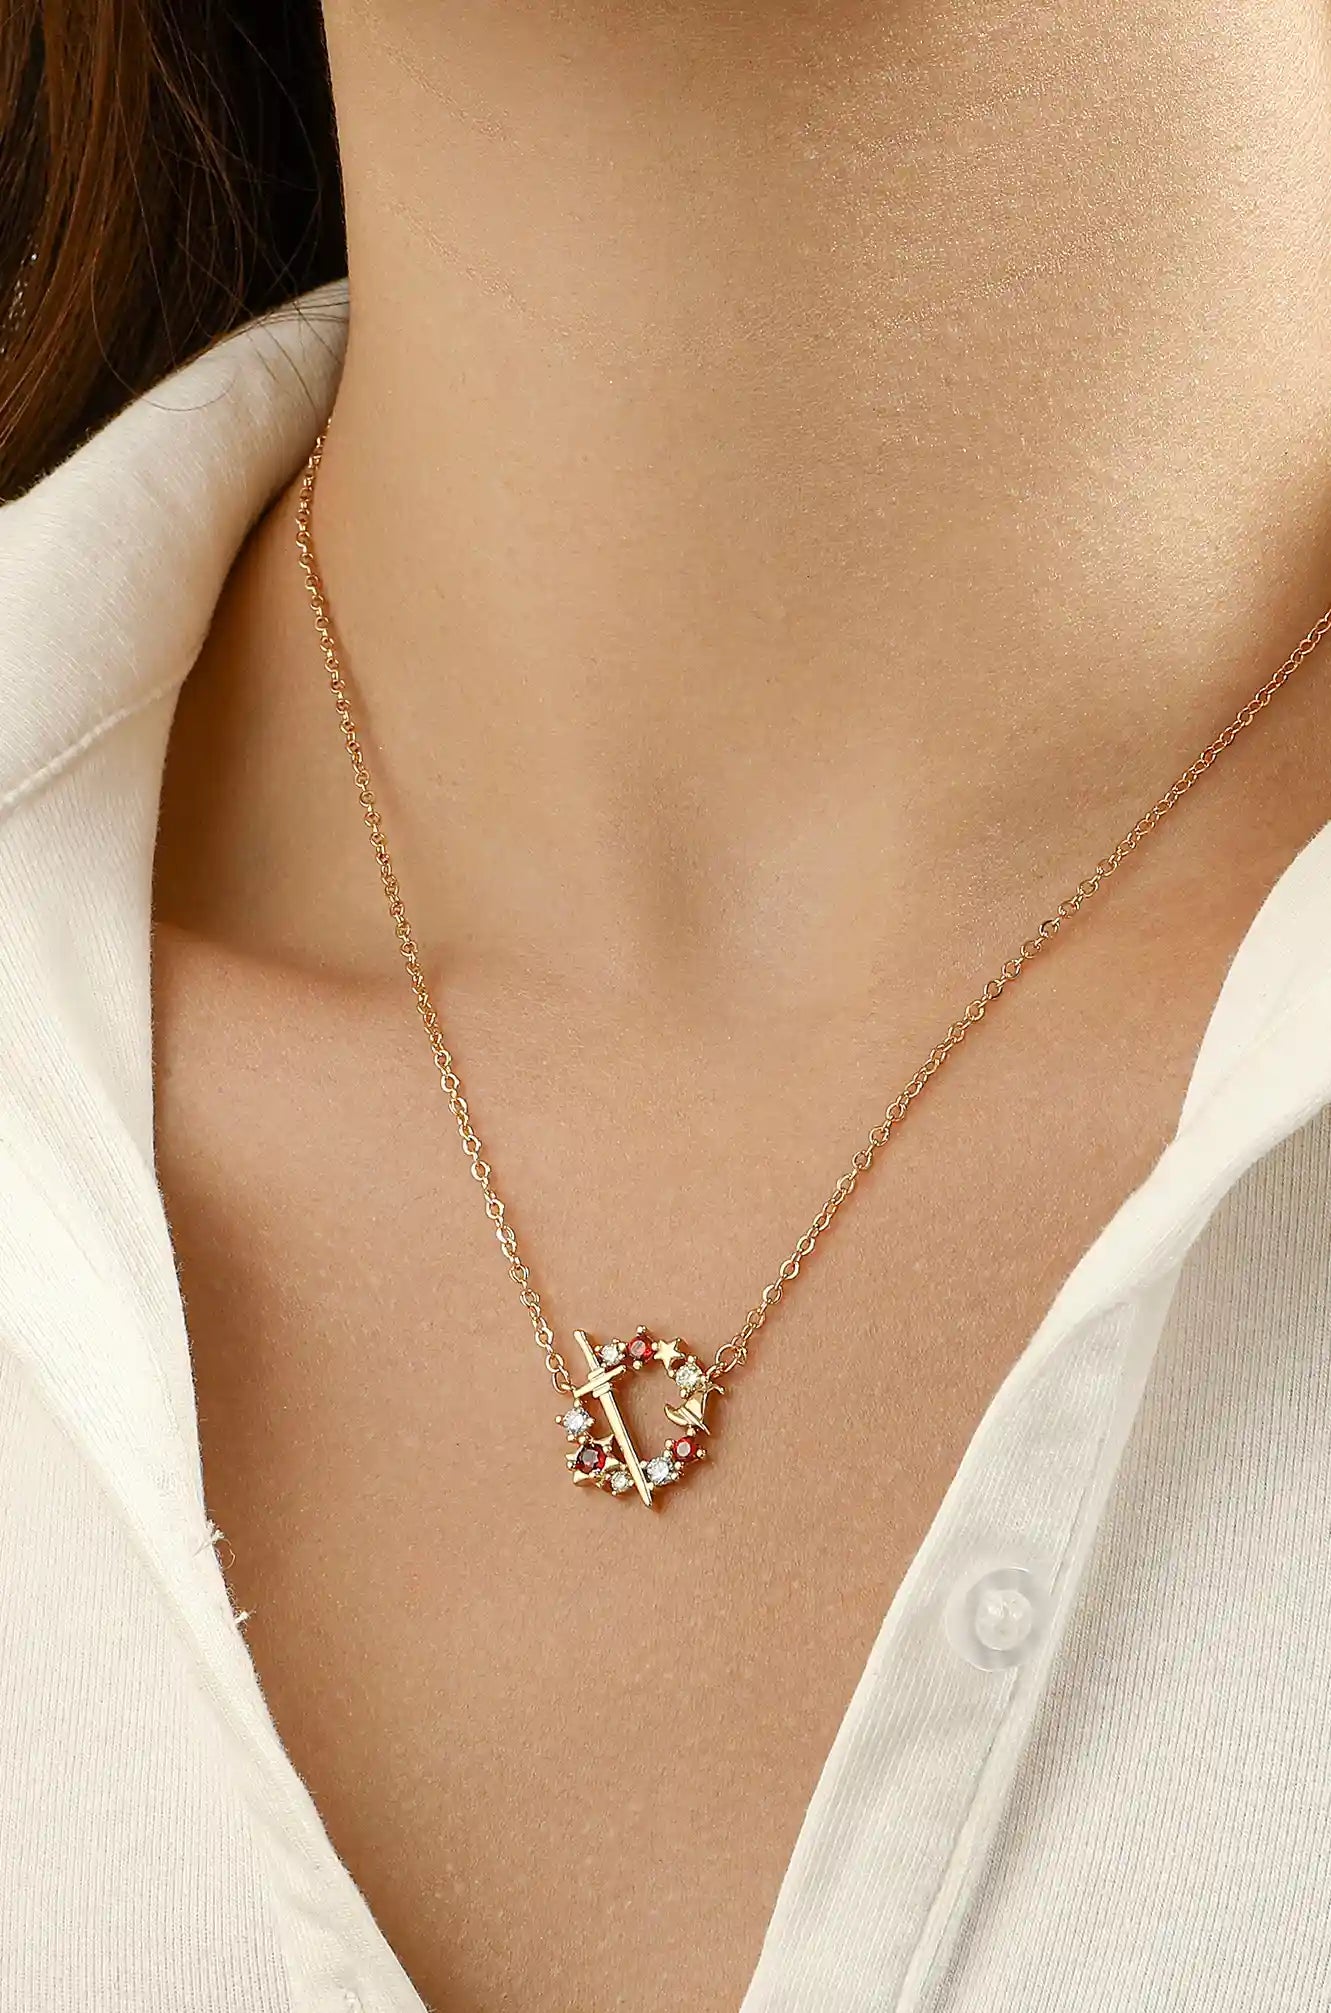 gold pendant necklace, charm necklace